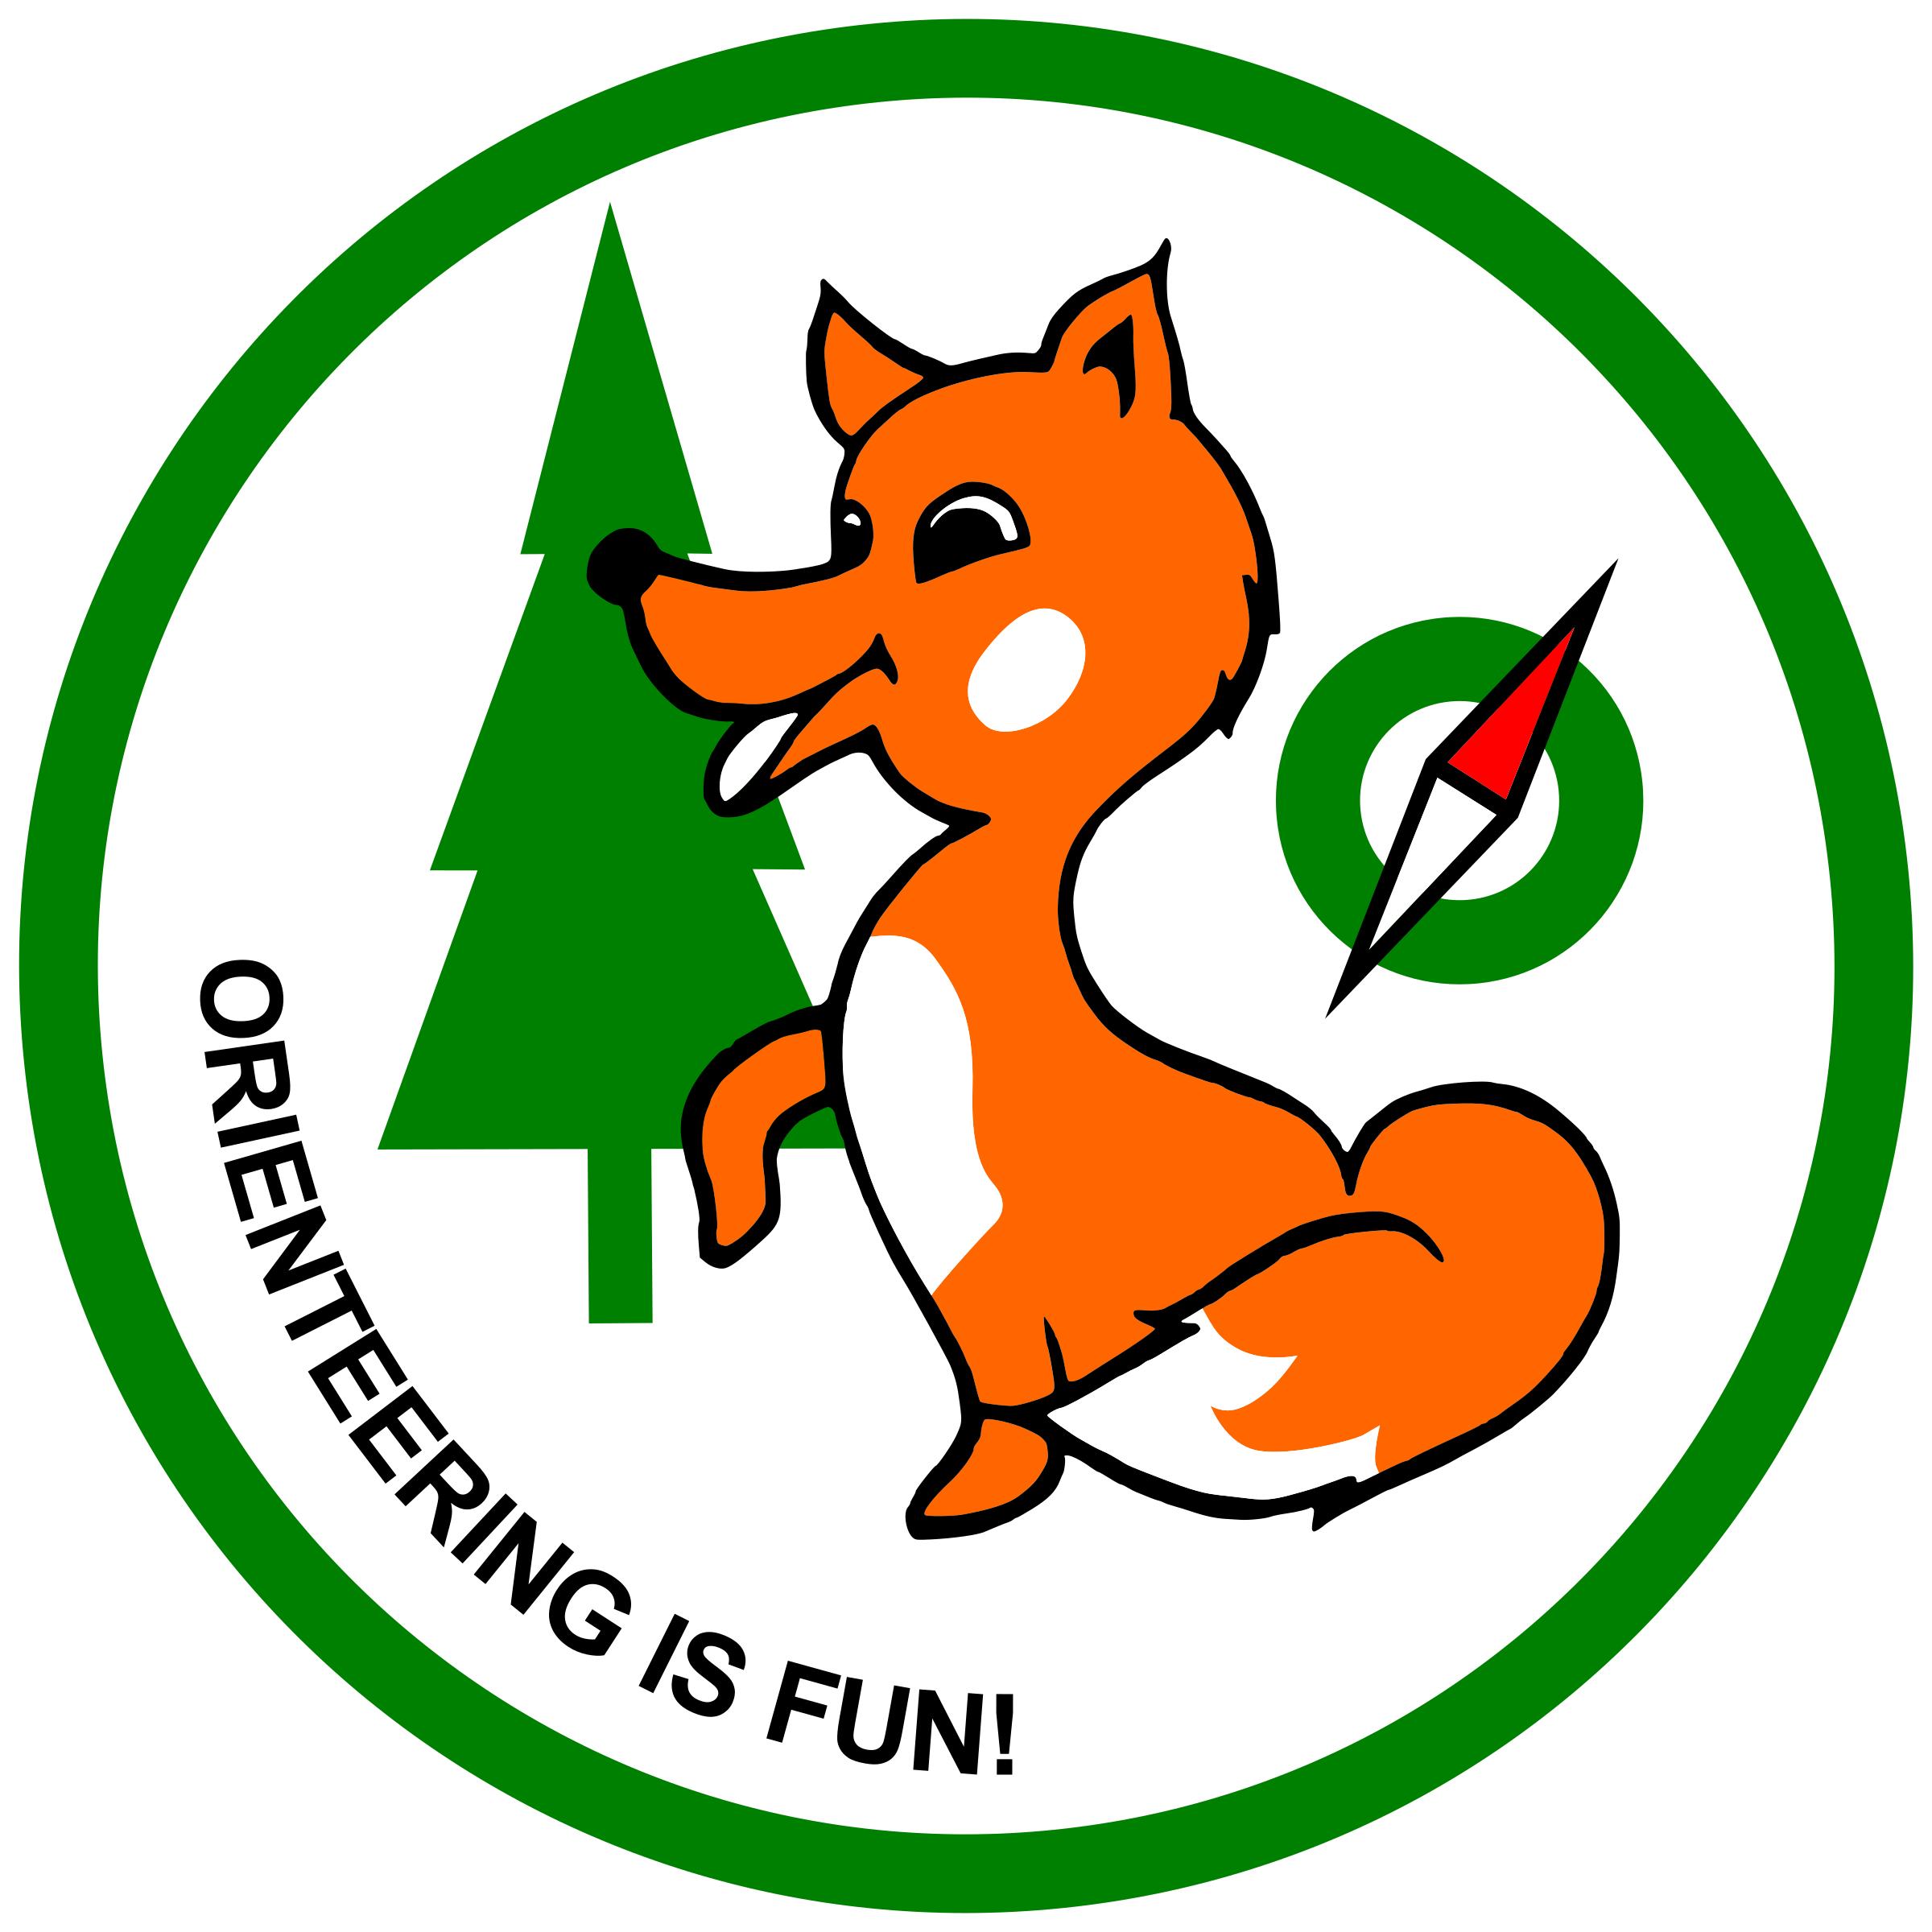 orienteering is fun - o fox png